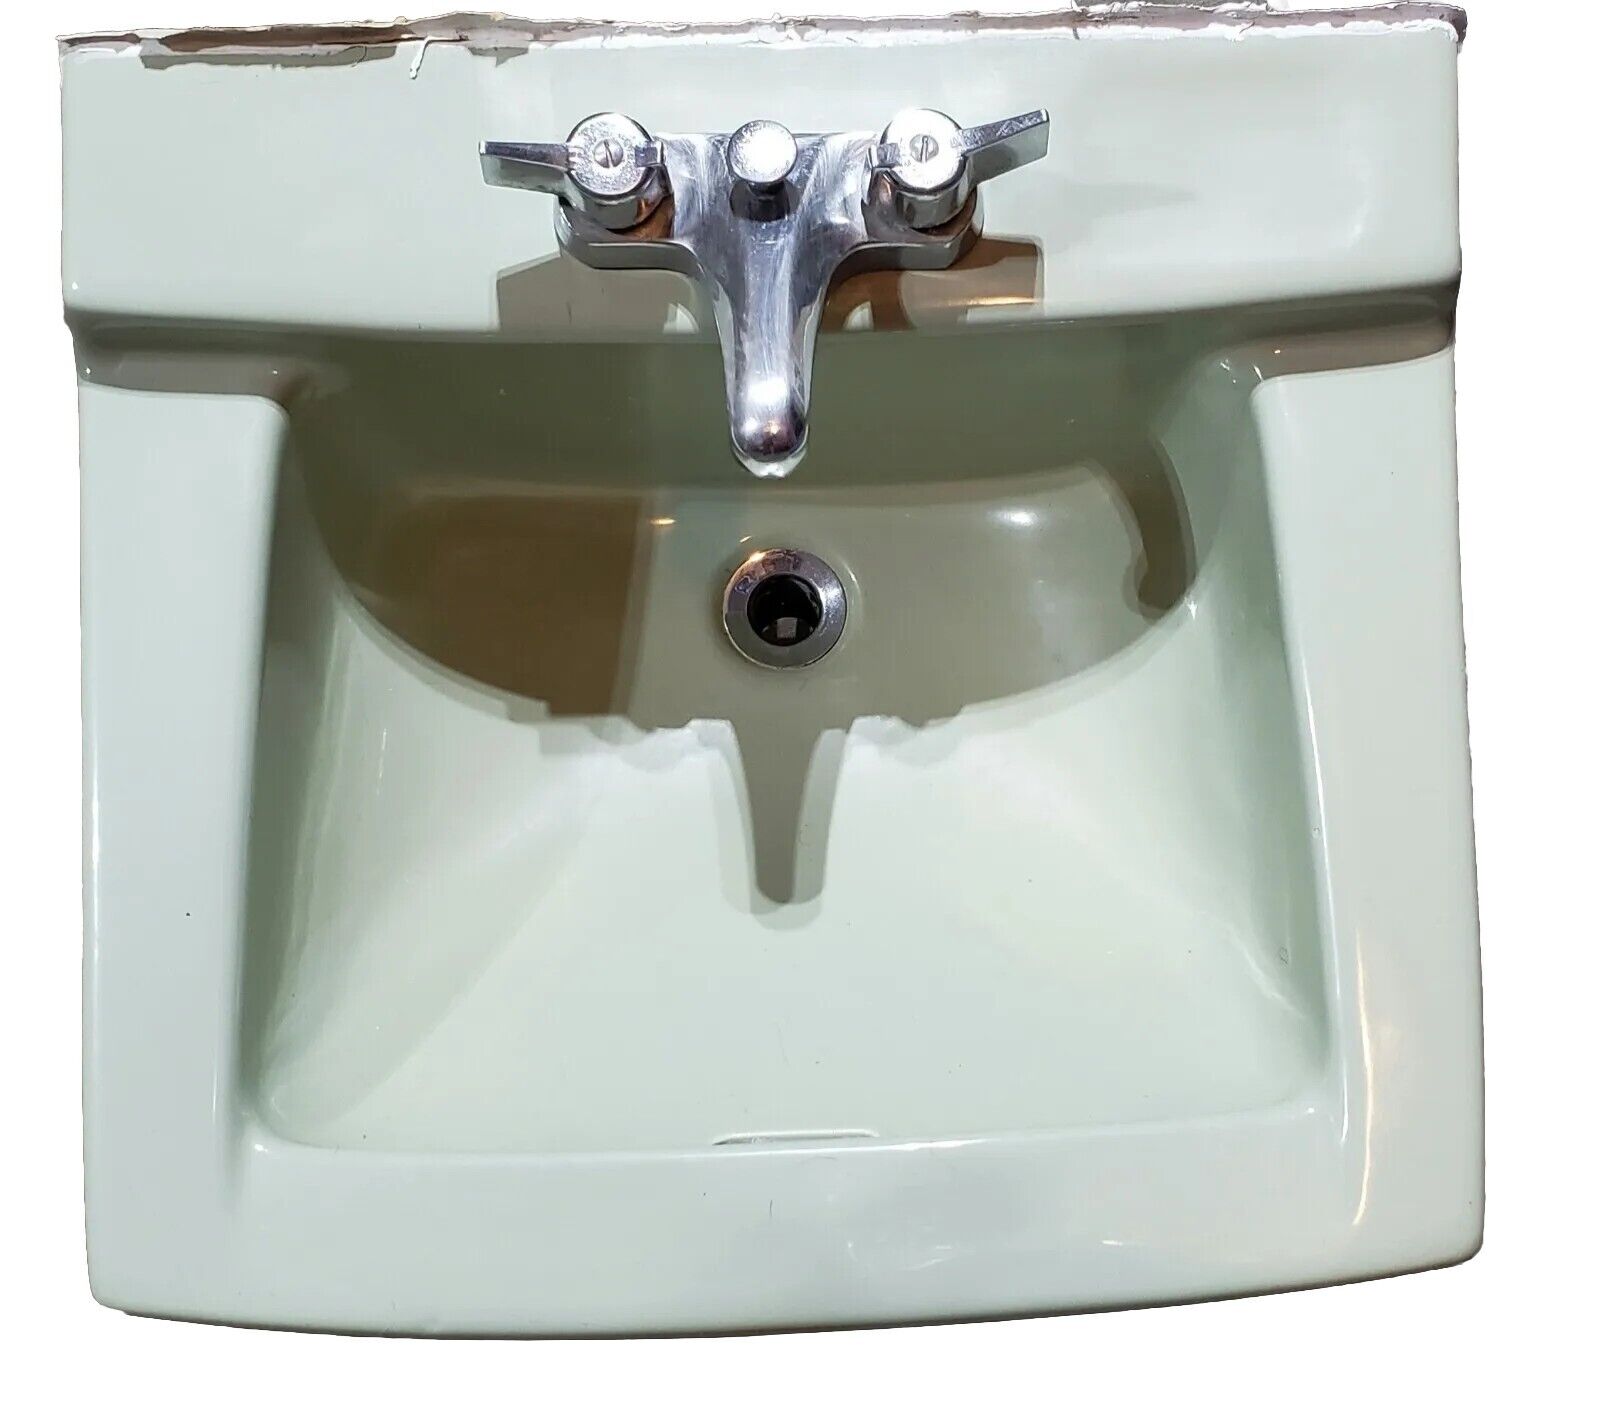 Vintage American Standard \'Mint Green\' Bathroom Sink 1960s w/faucet fixtures